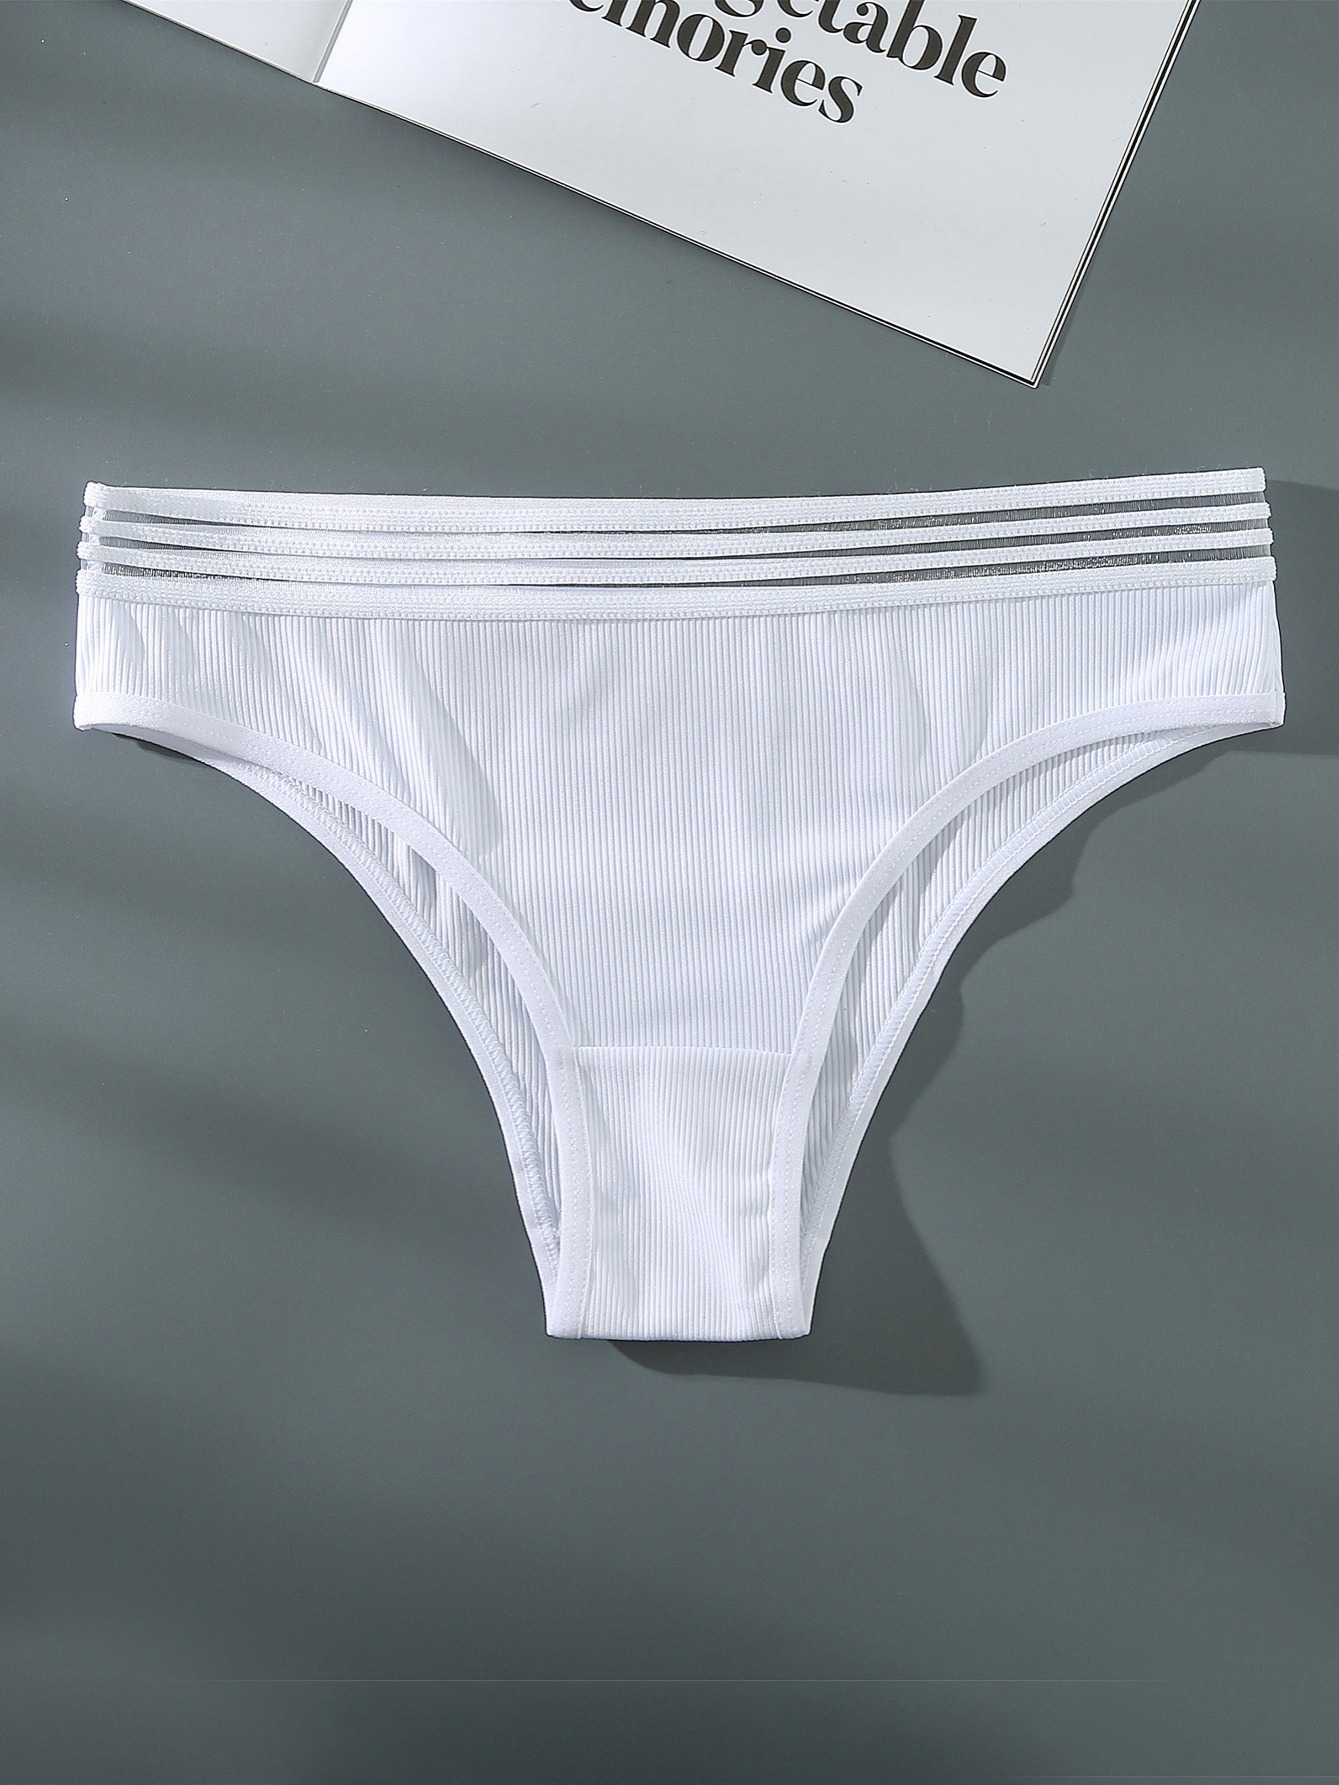 5pcs Disposable Triangular Cotton Briefs, Comfort & Breathable Intimates  Panties For Travel, Women's Lingerie & Underwear